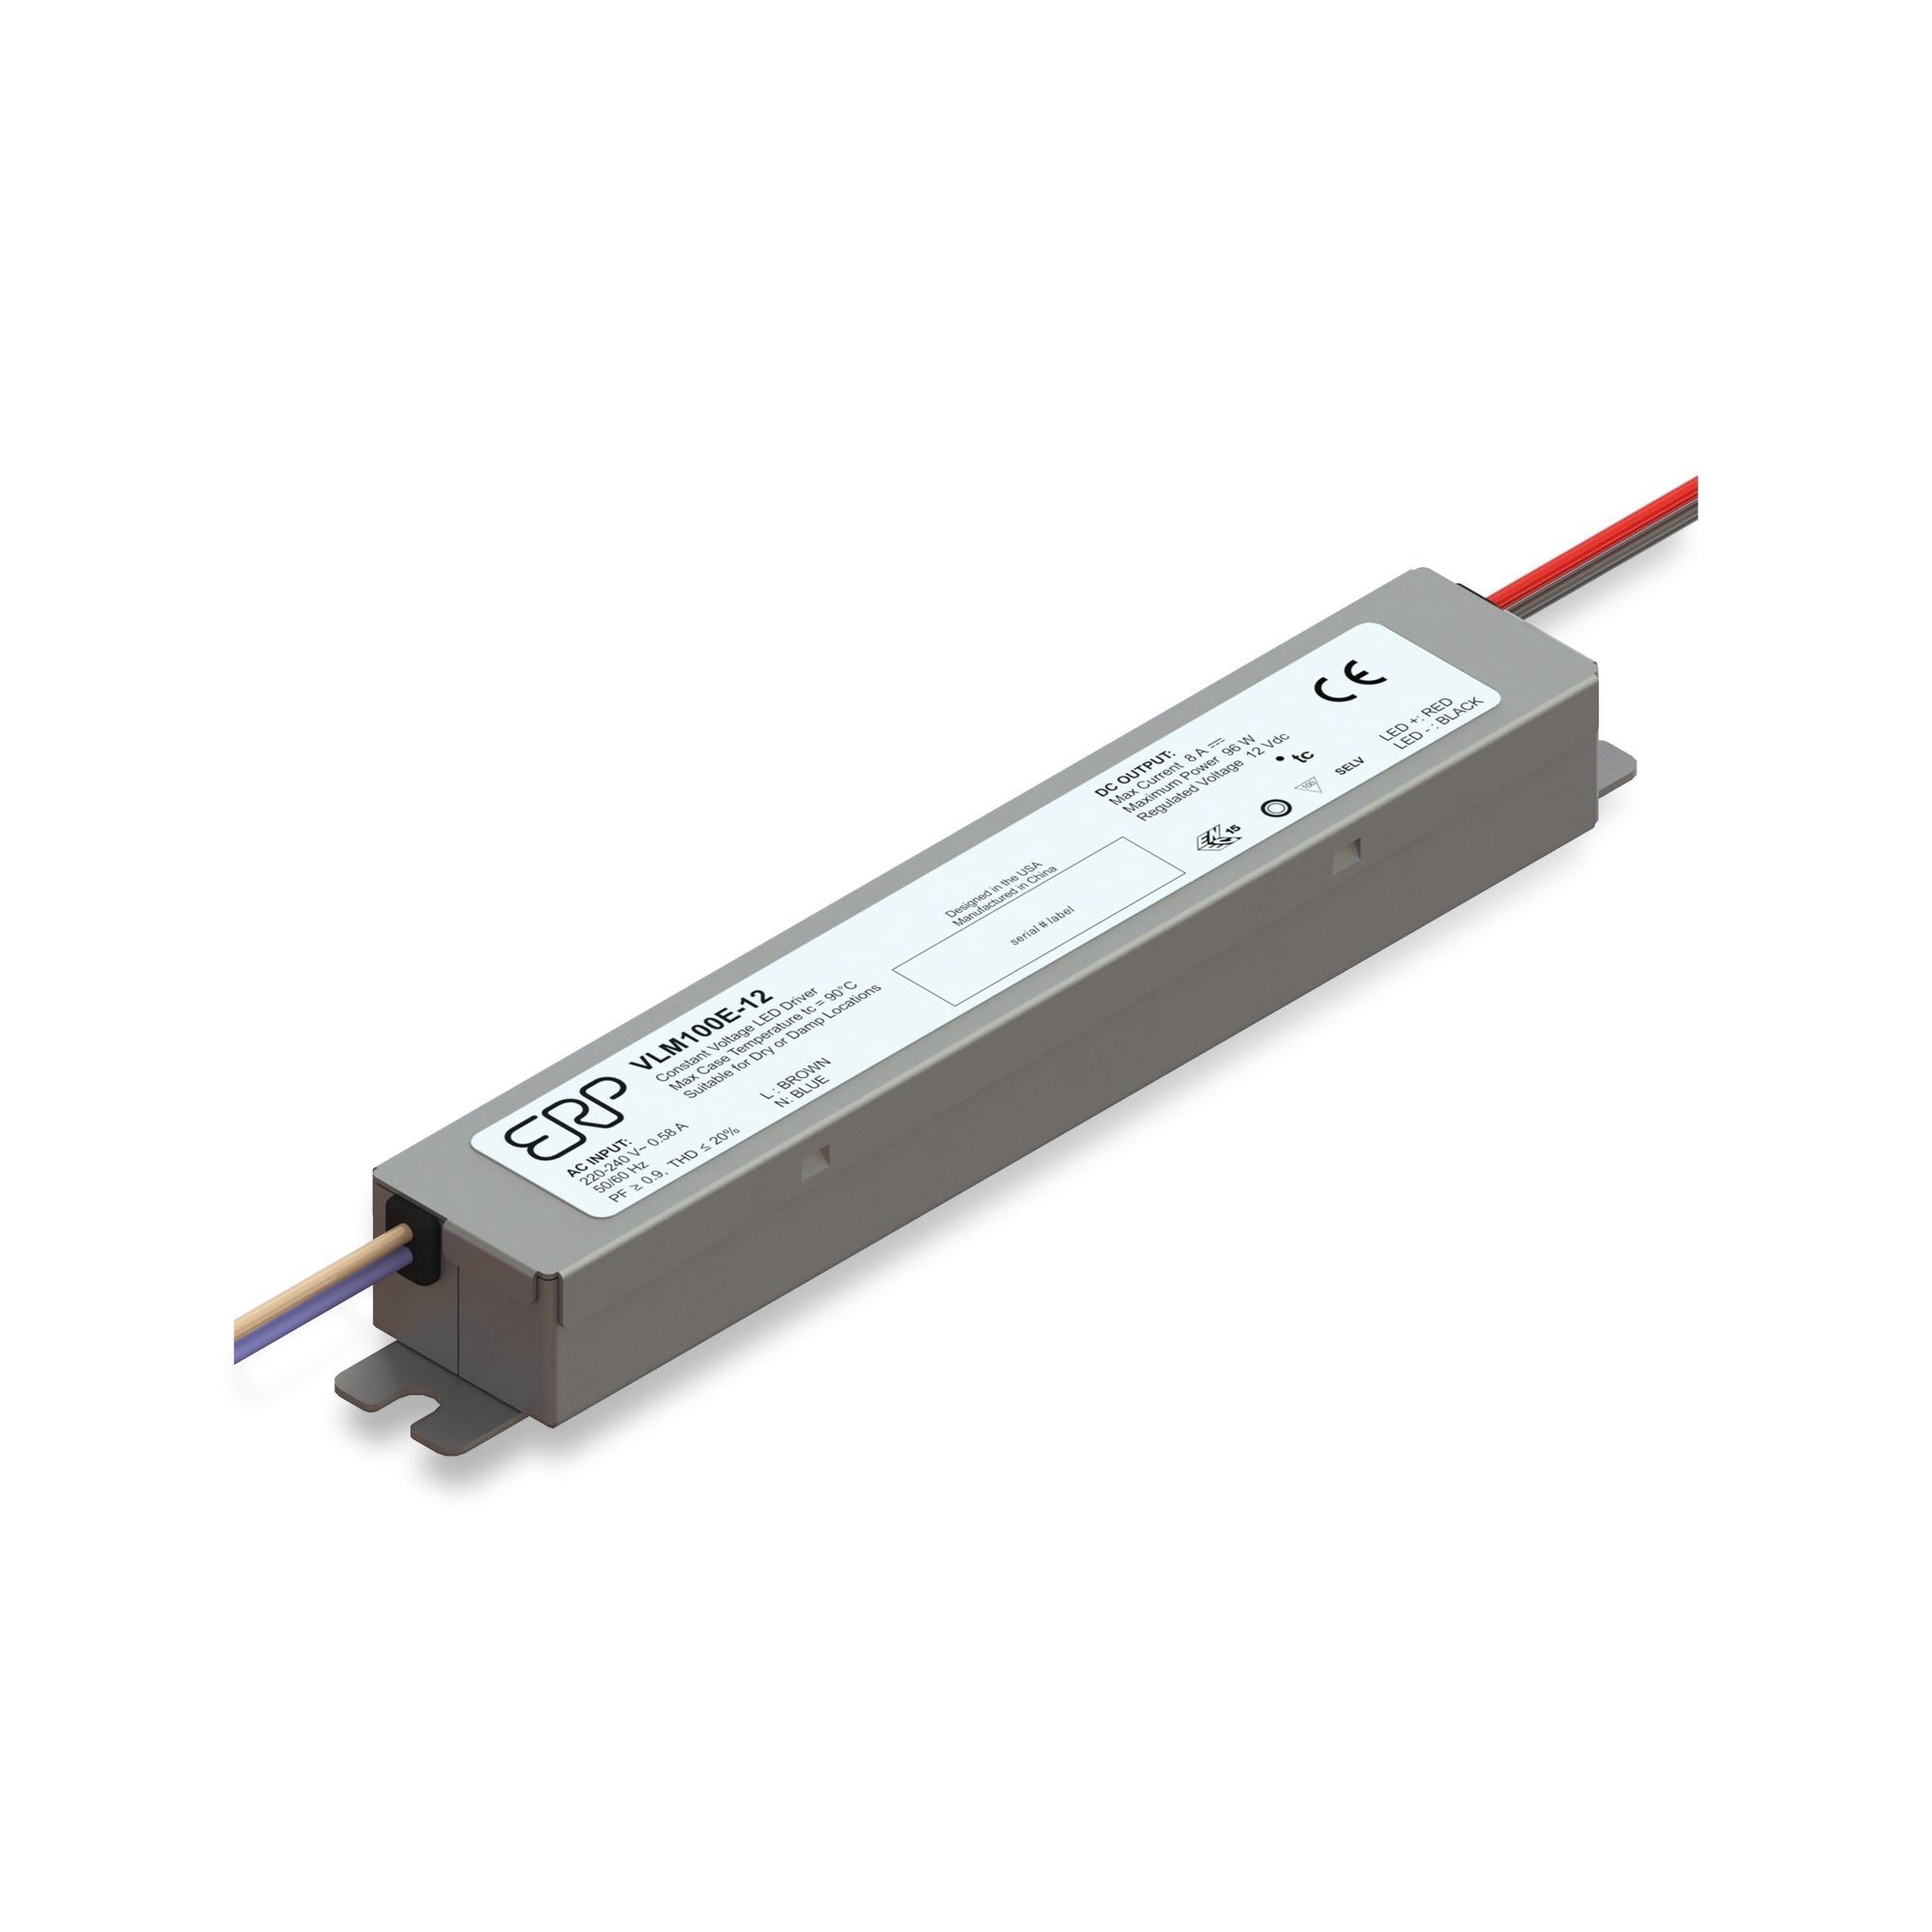 ERP Power VLM100E-24 24V-100W power supply with leads